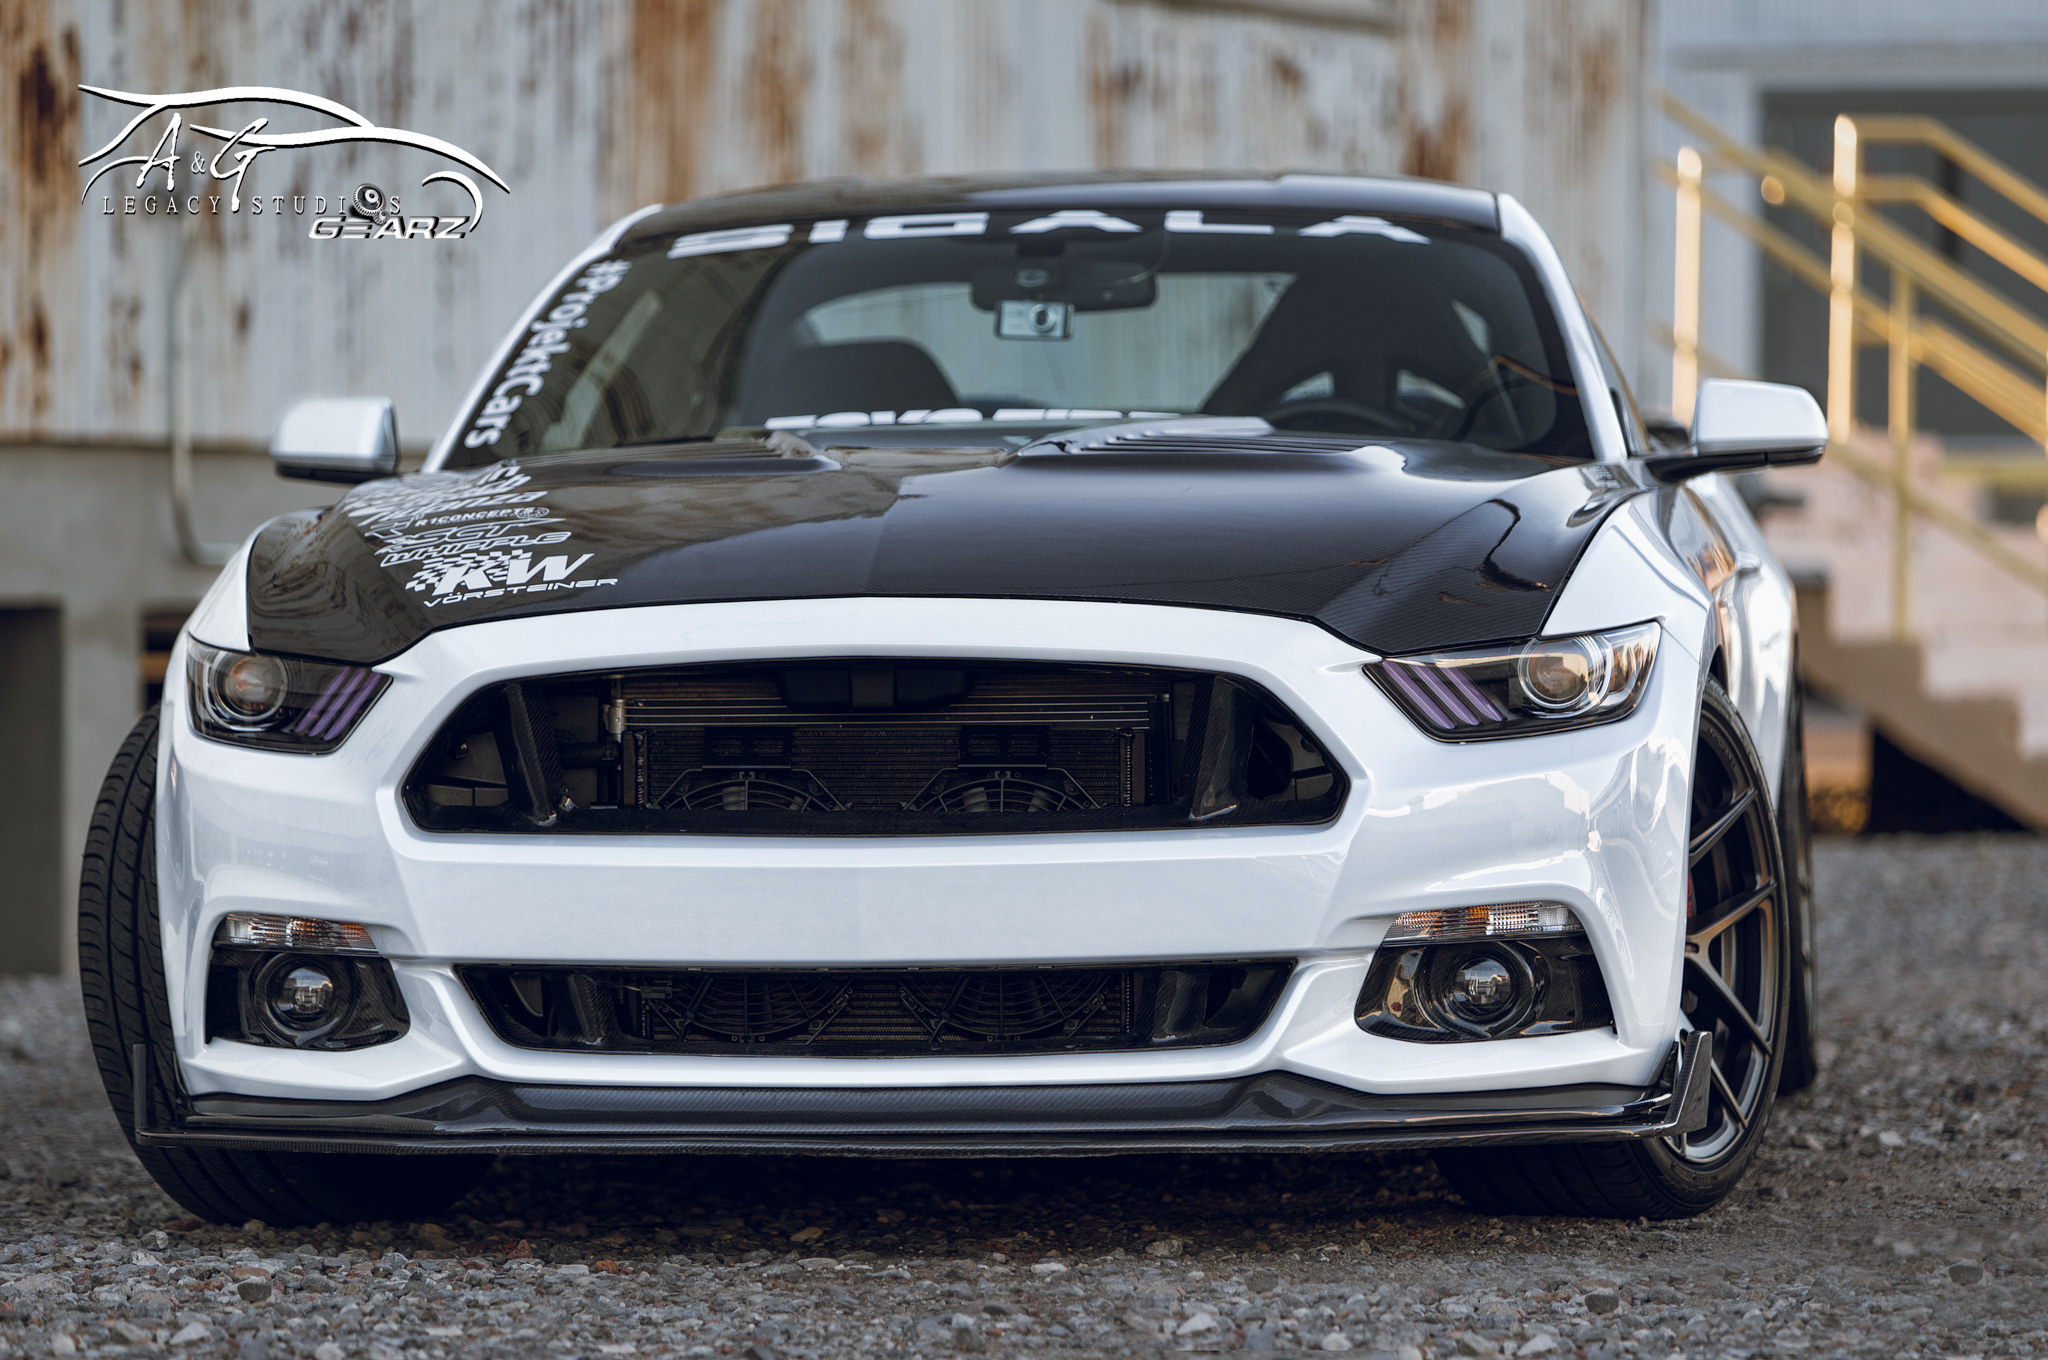 Sixth Generation Ford Mustang: 2015 - Present - Mustang 360